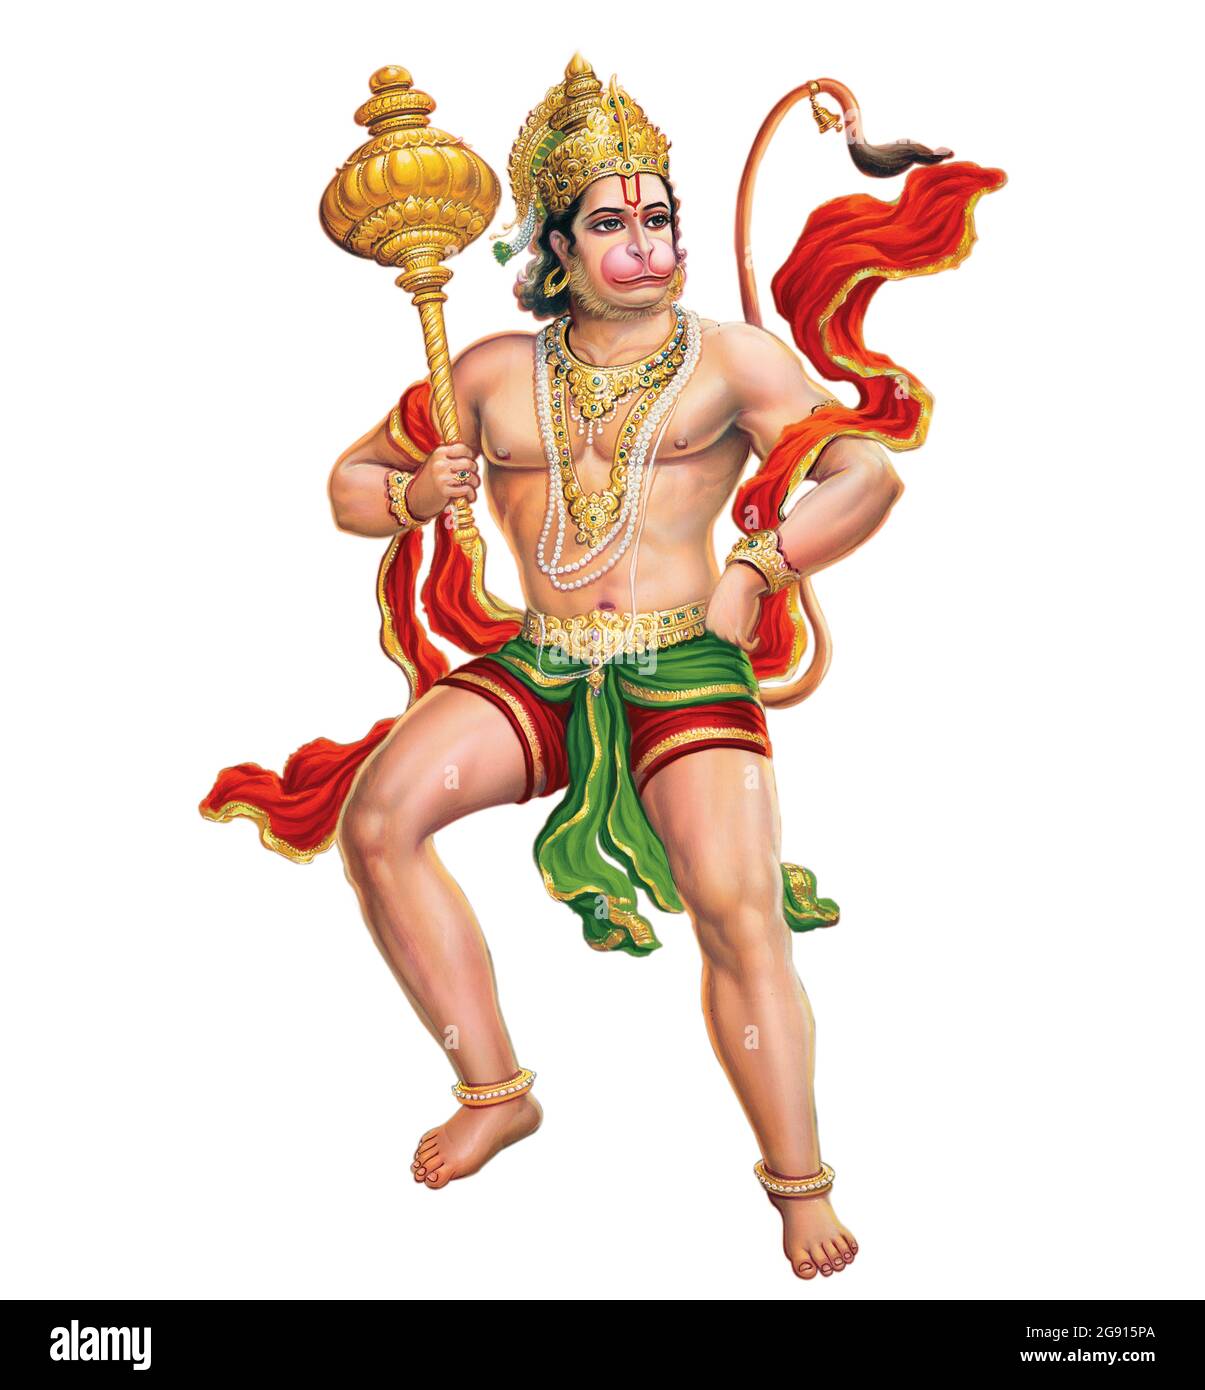 Pin on Shri hanuman